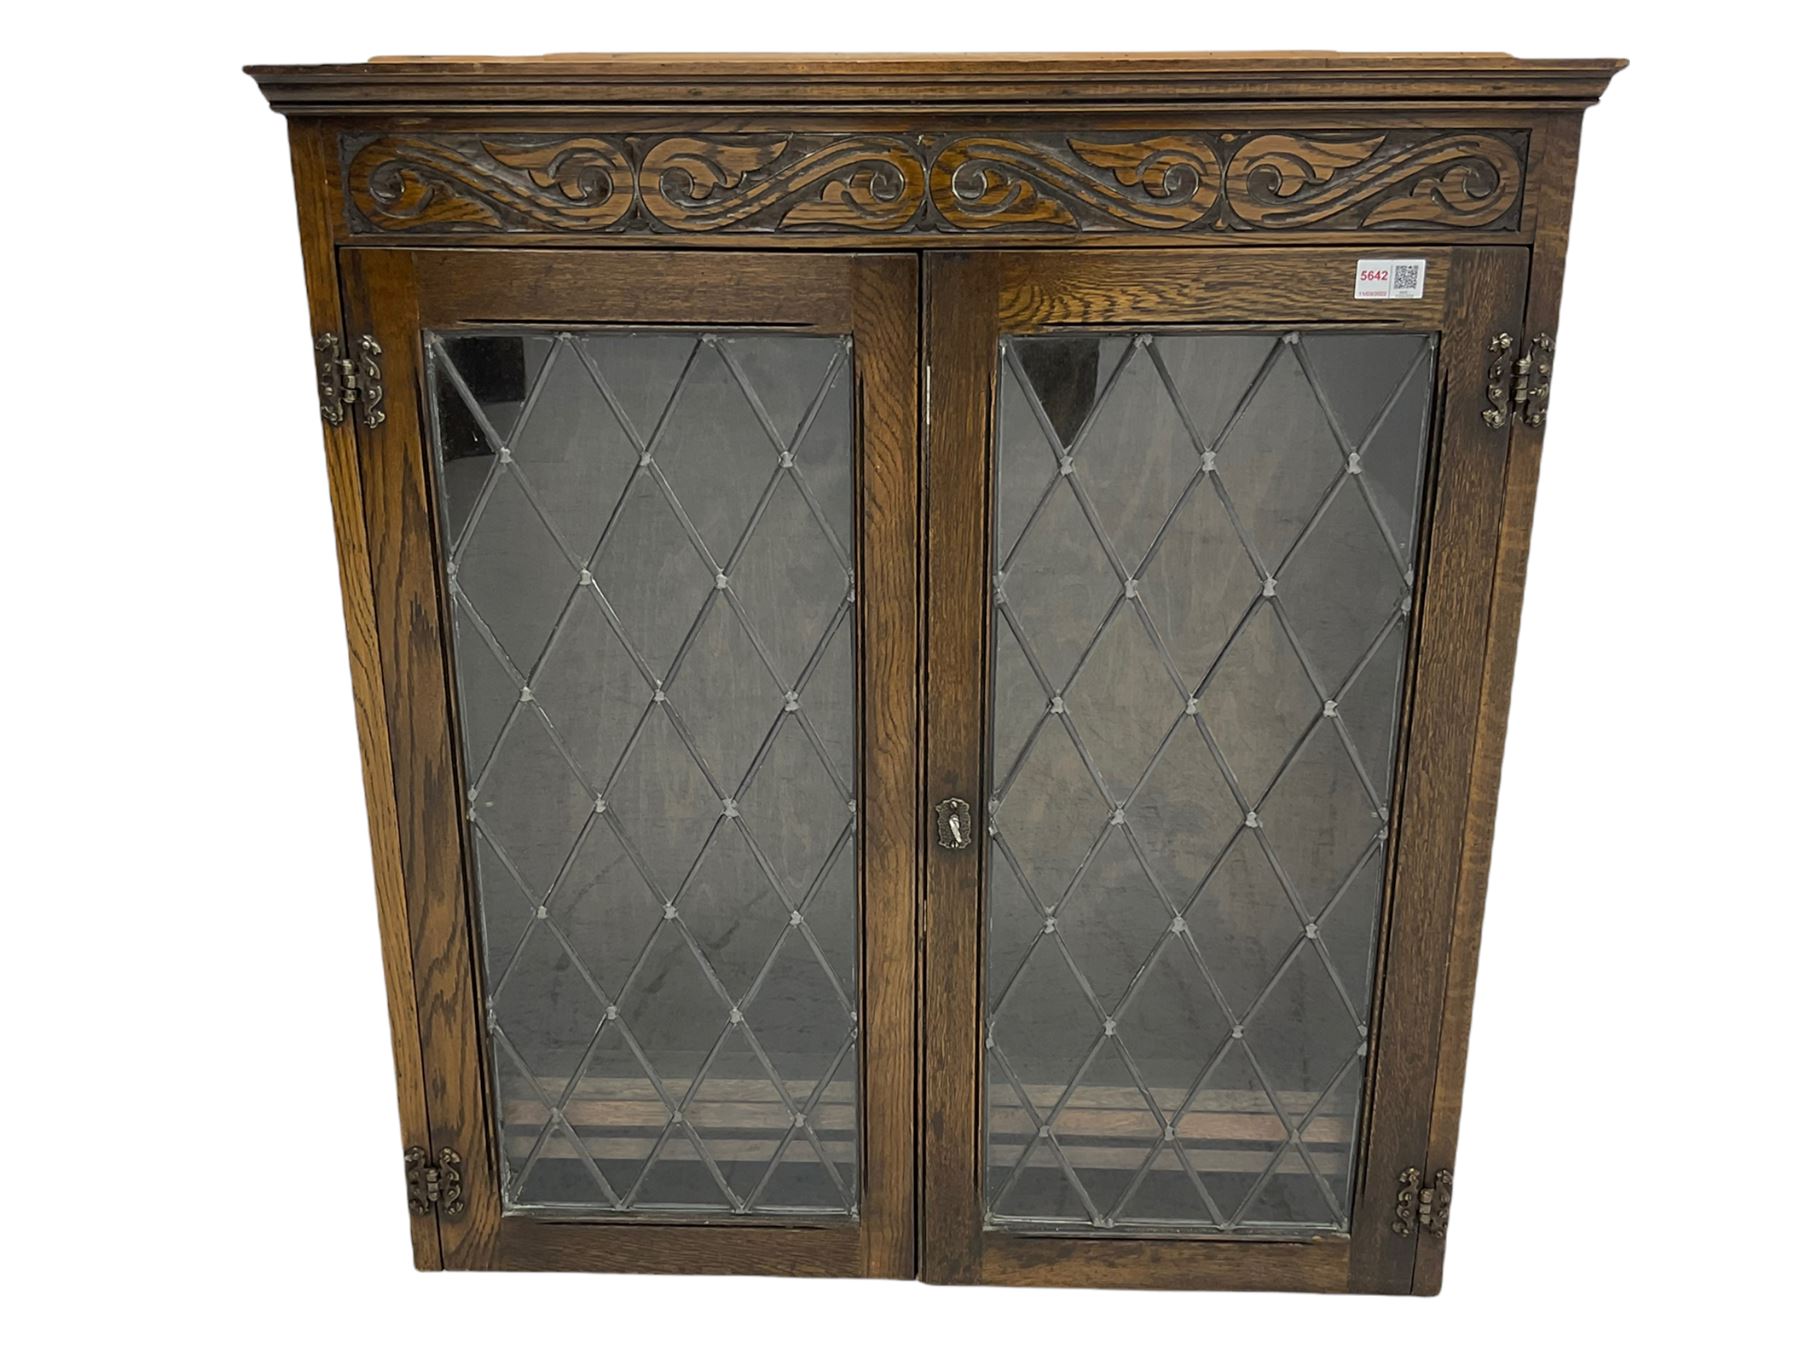 Oak bookcase with lead glazed doors - Image 2 of 5